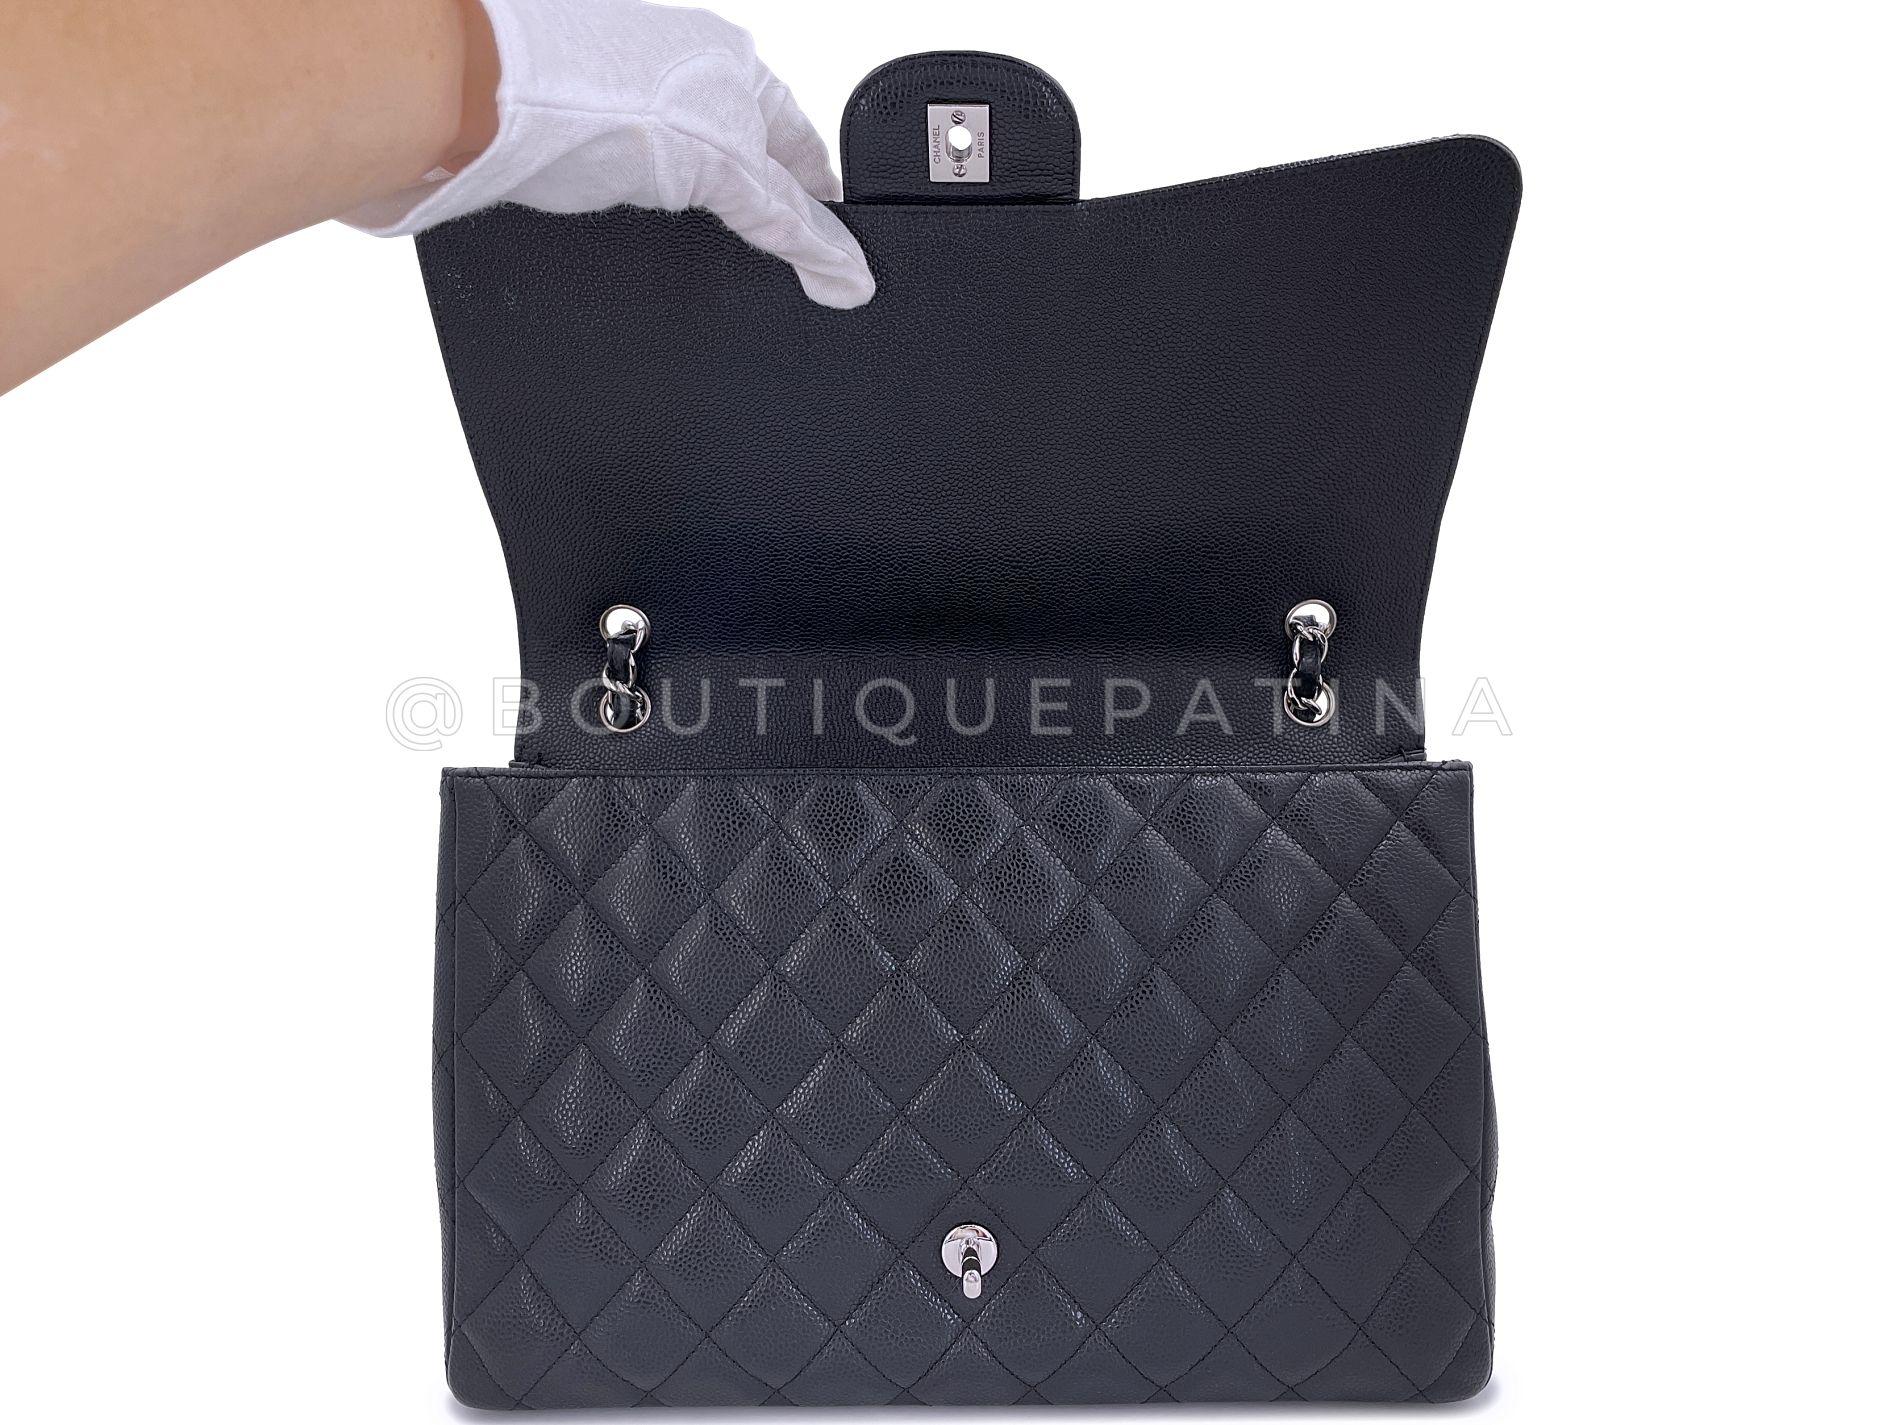 Chanel Black Caviar Maxi Flap Bag SHW Single 66714 For Sale 5